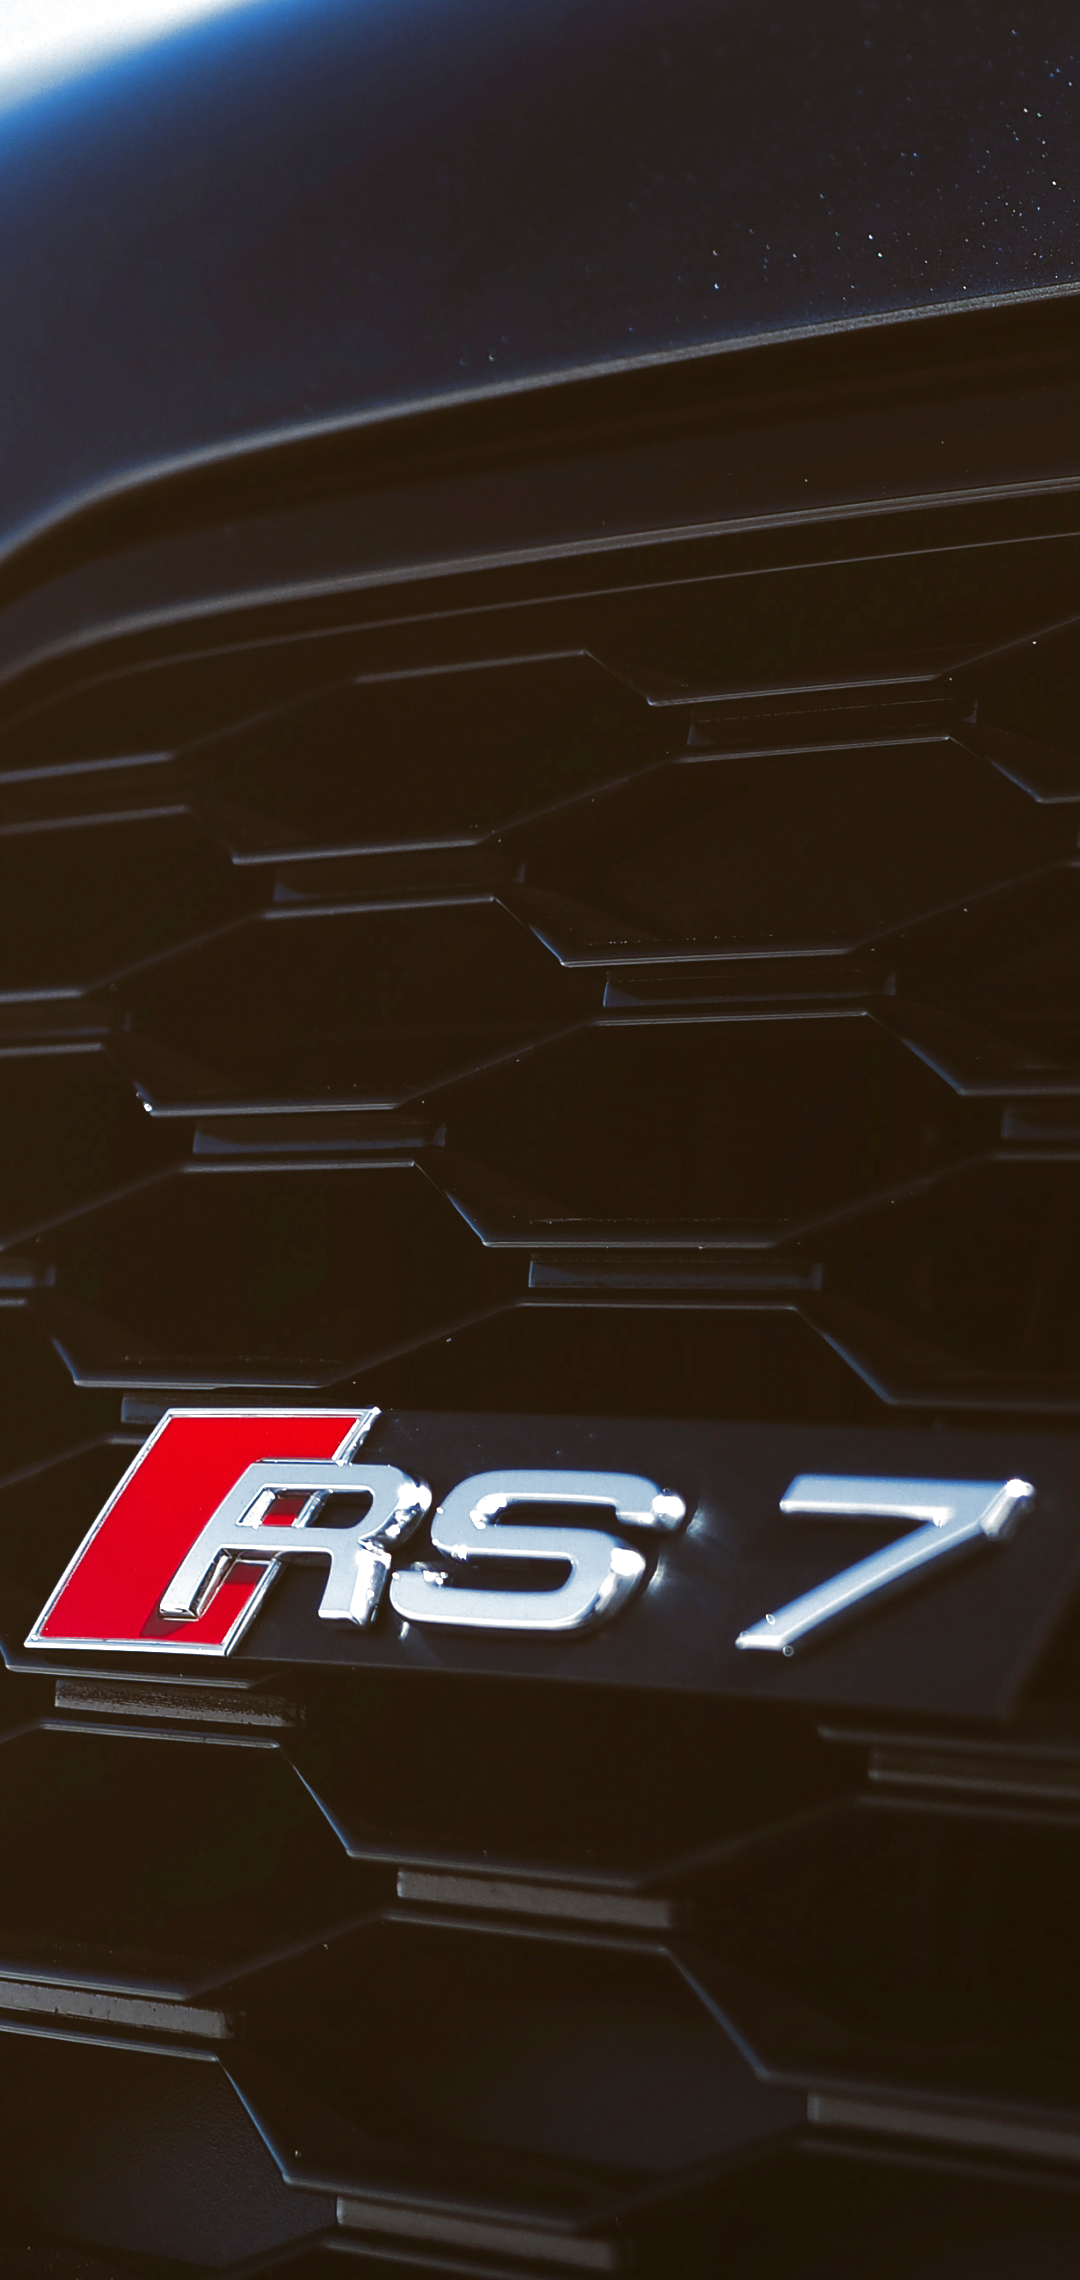 Vehicles / Audi Rs7 Mobile Wallpaper, HD Wallpaper